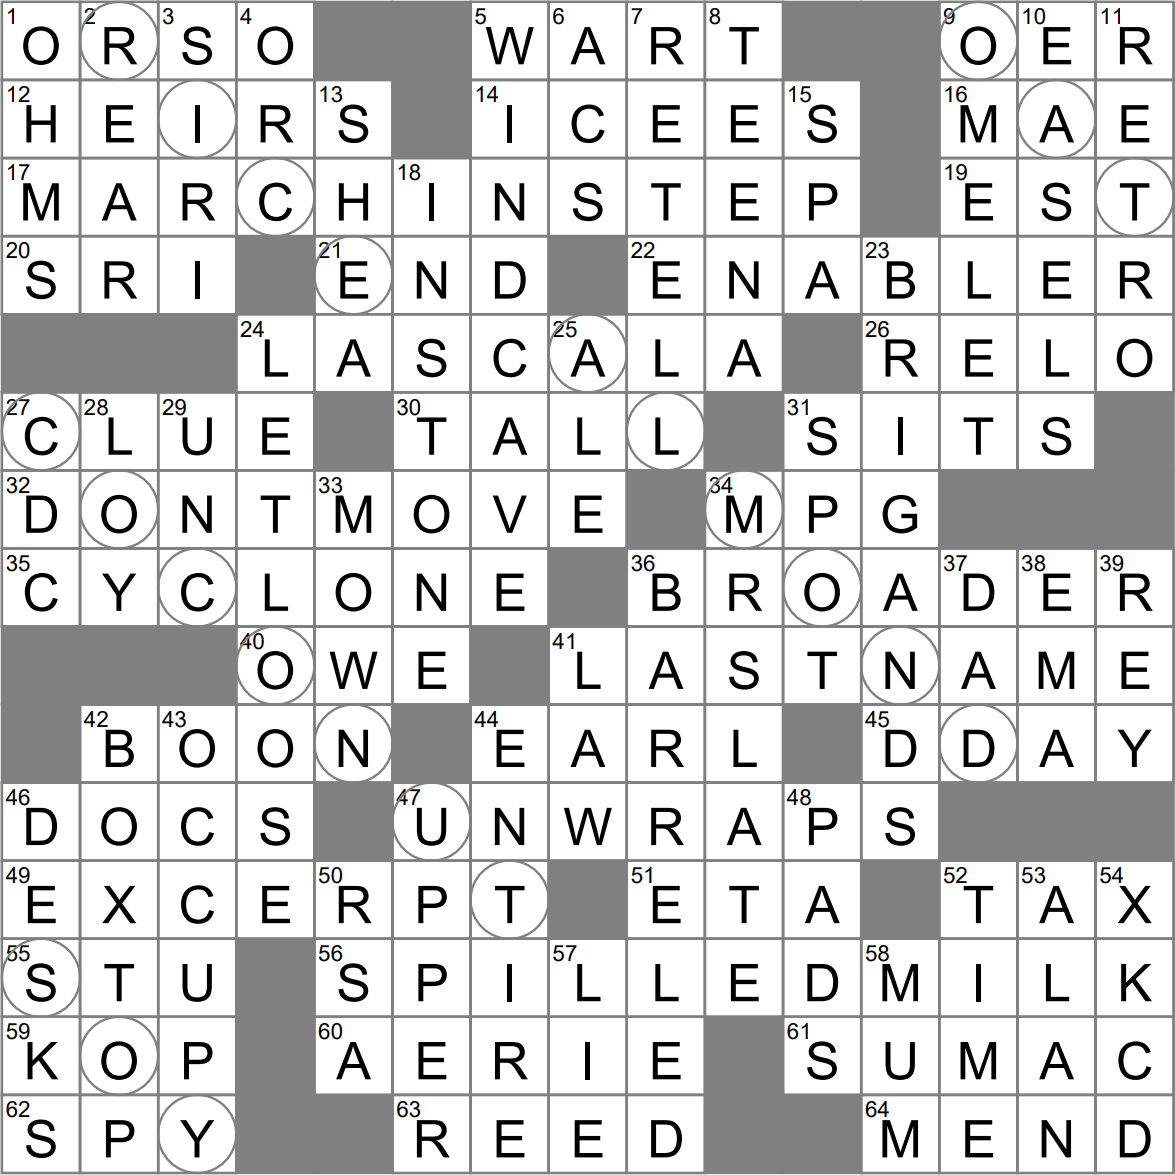 LA Times Crossword 1 May 23, Monday 